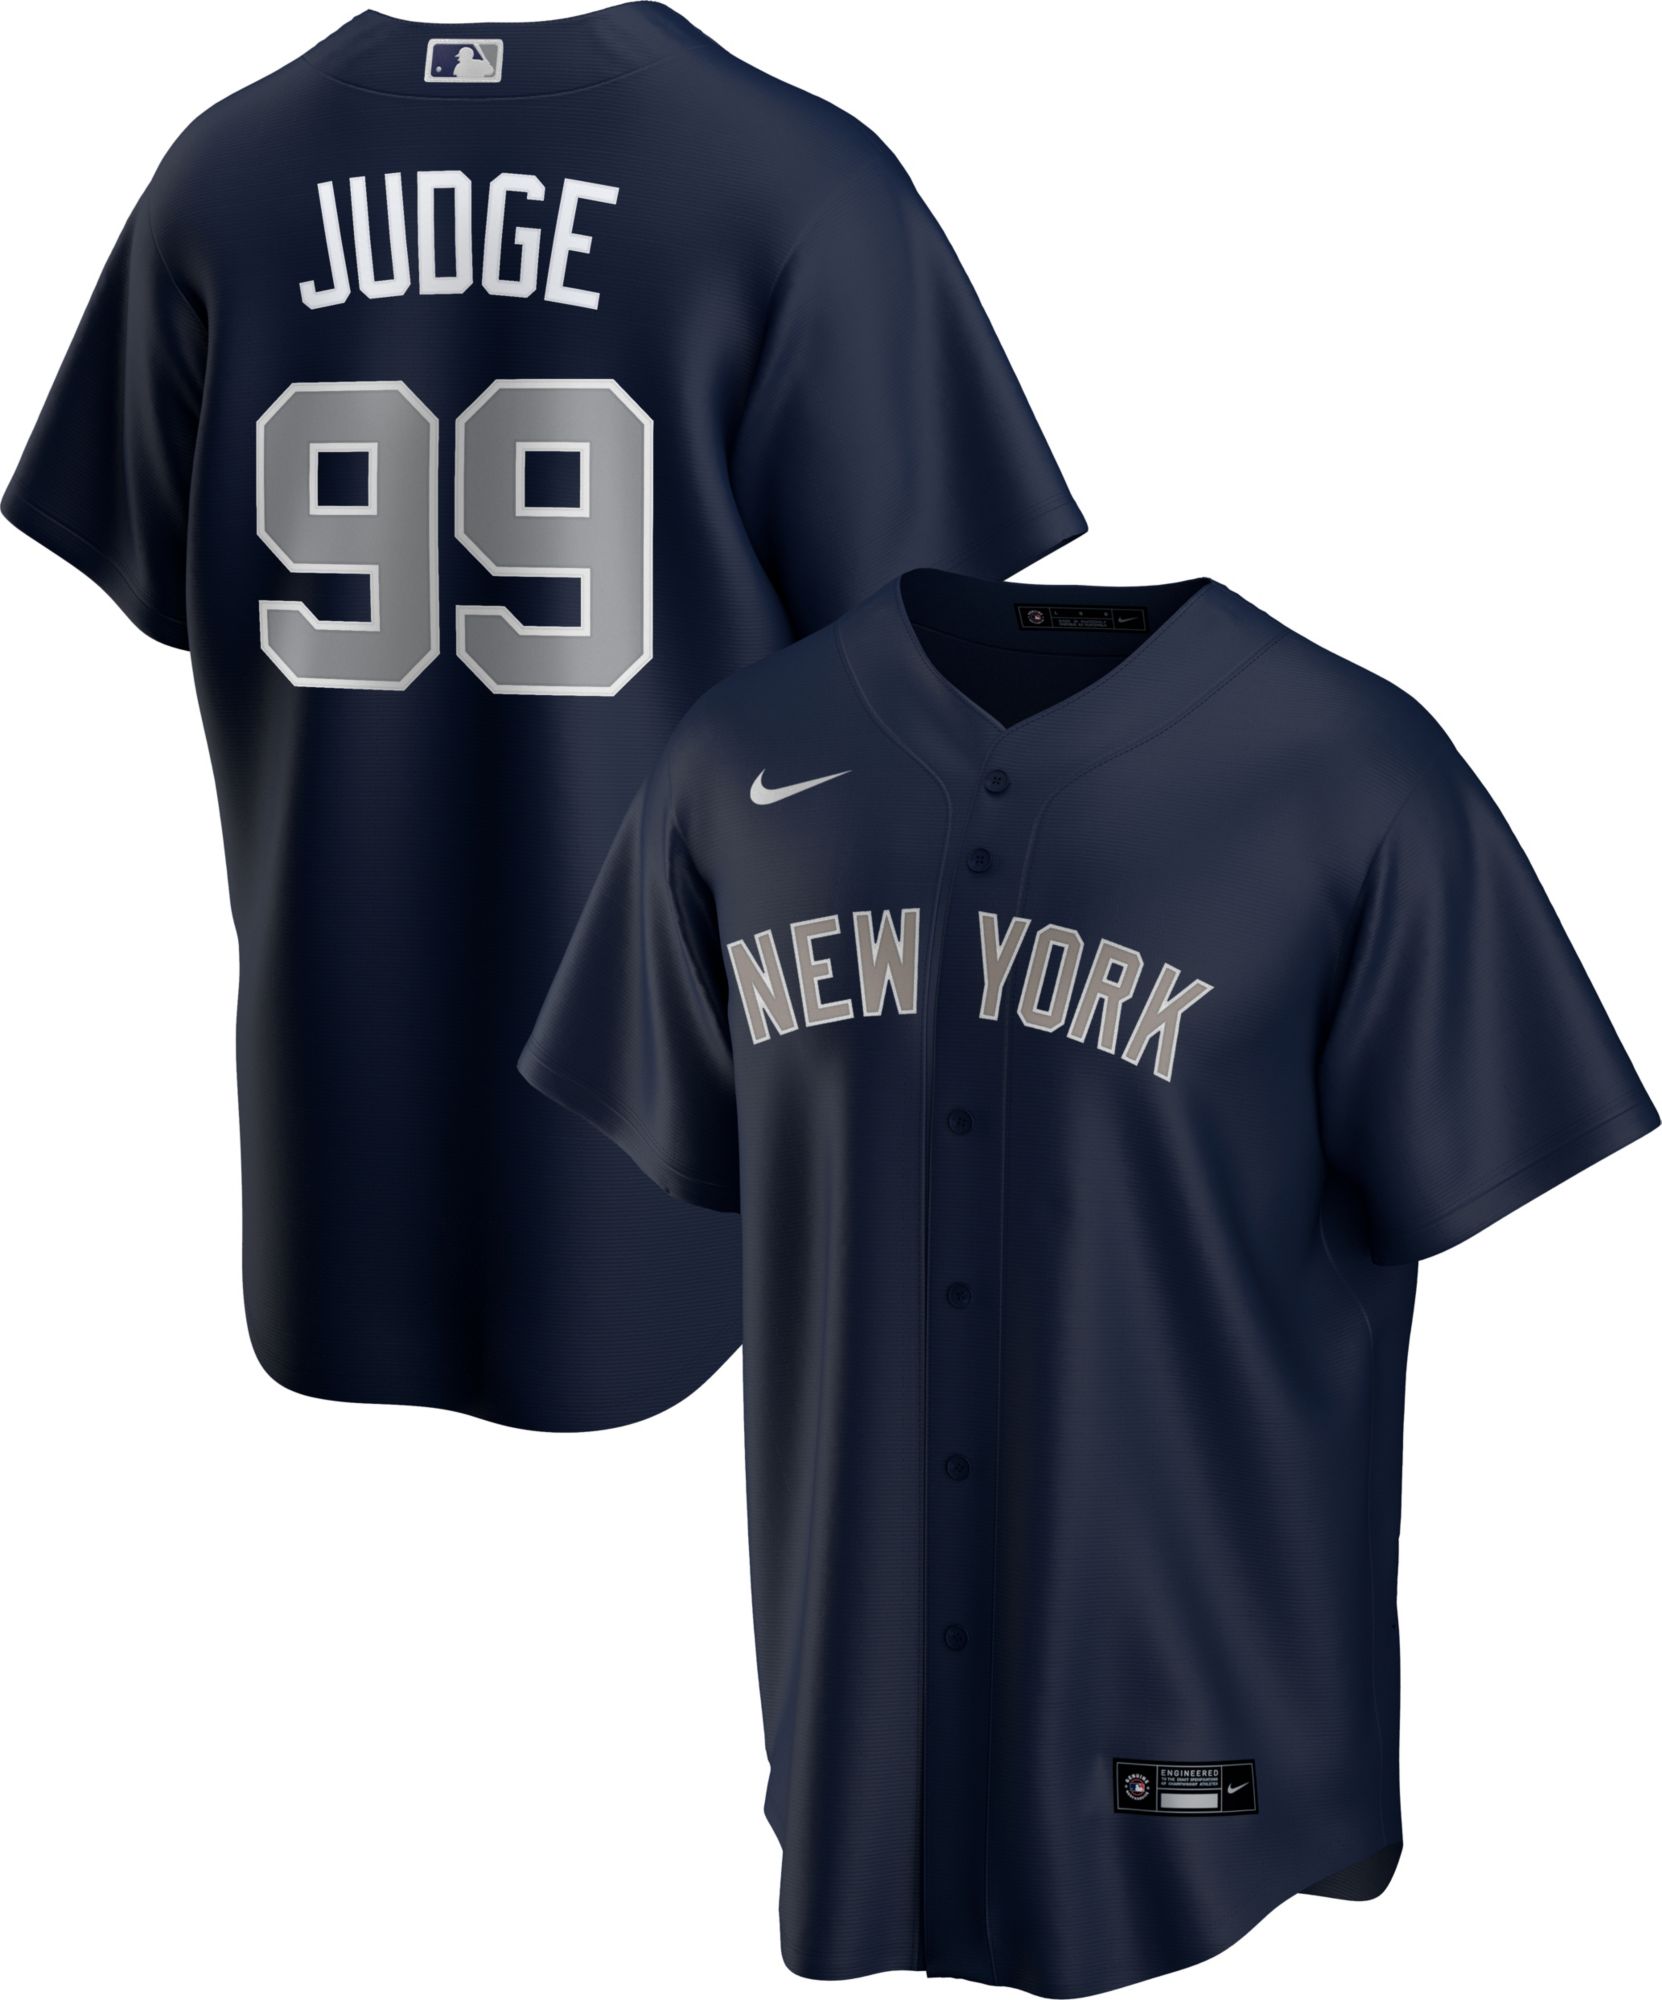 judge 99 yankees jersey